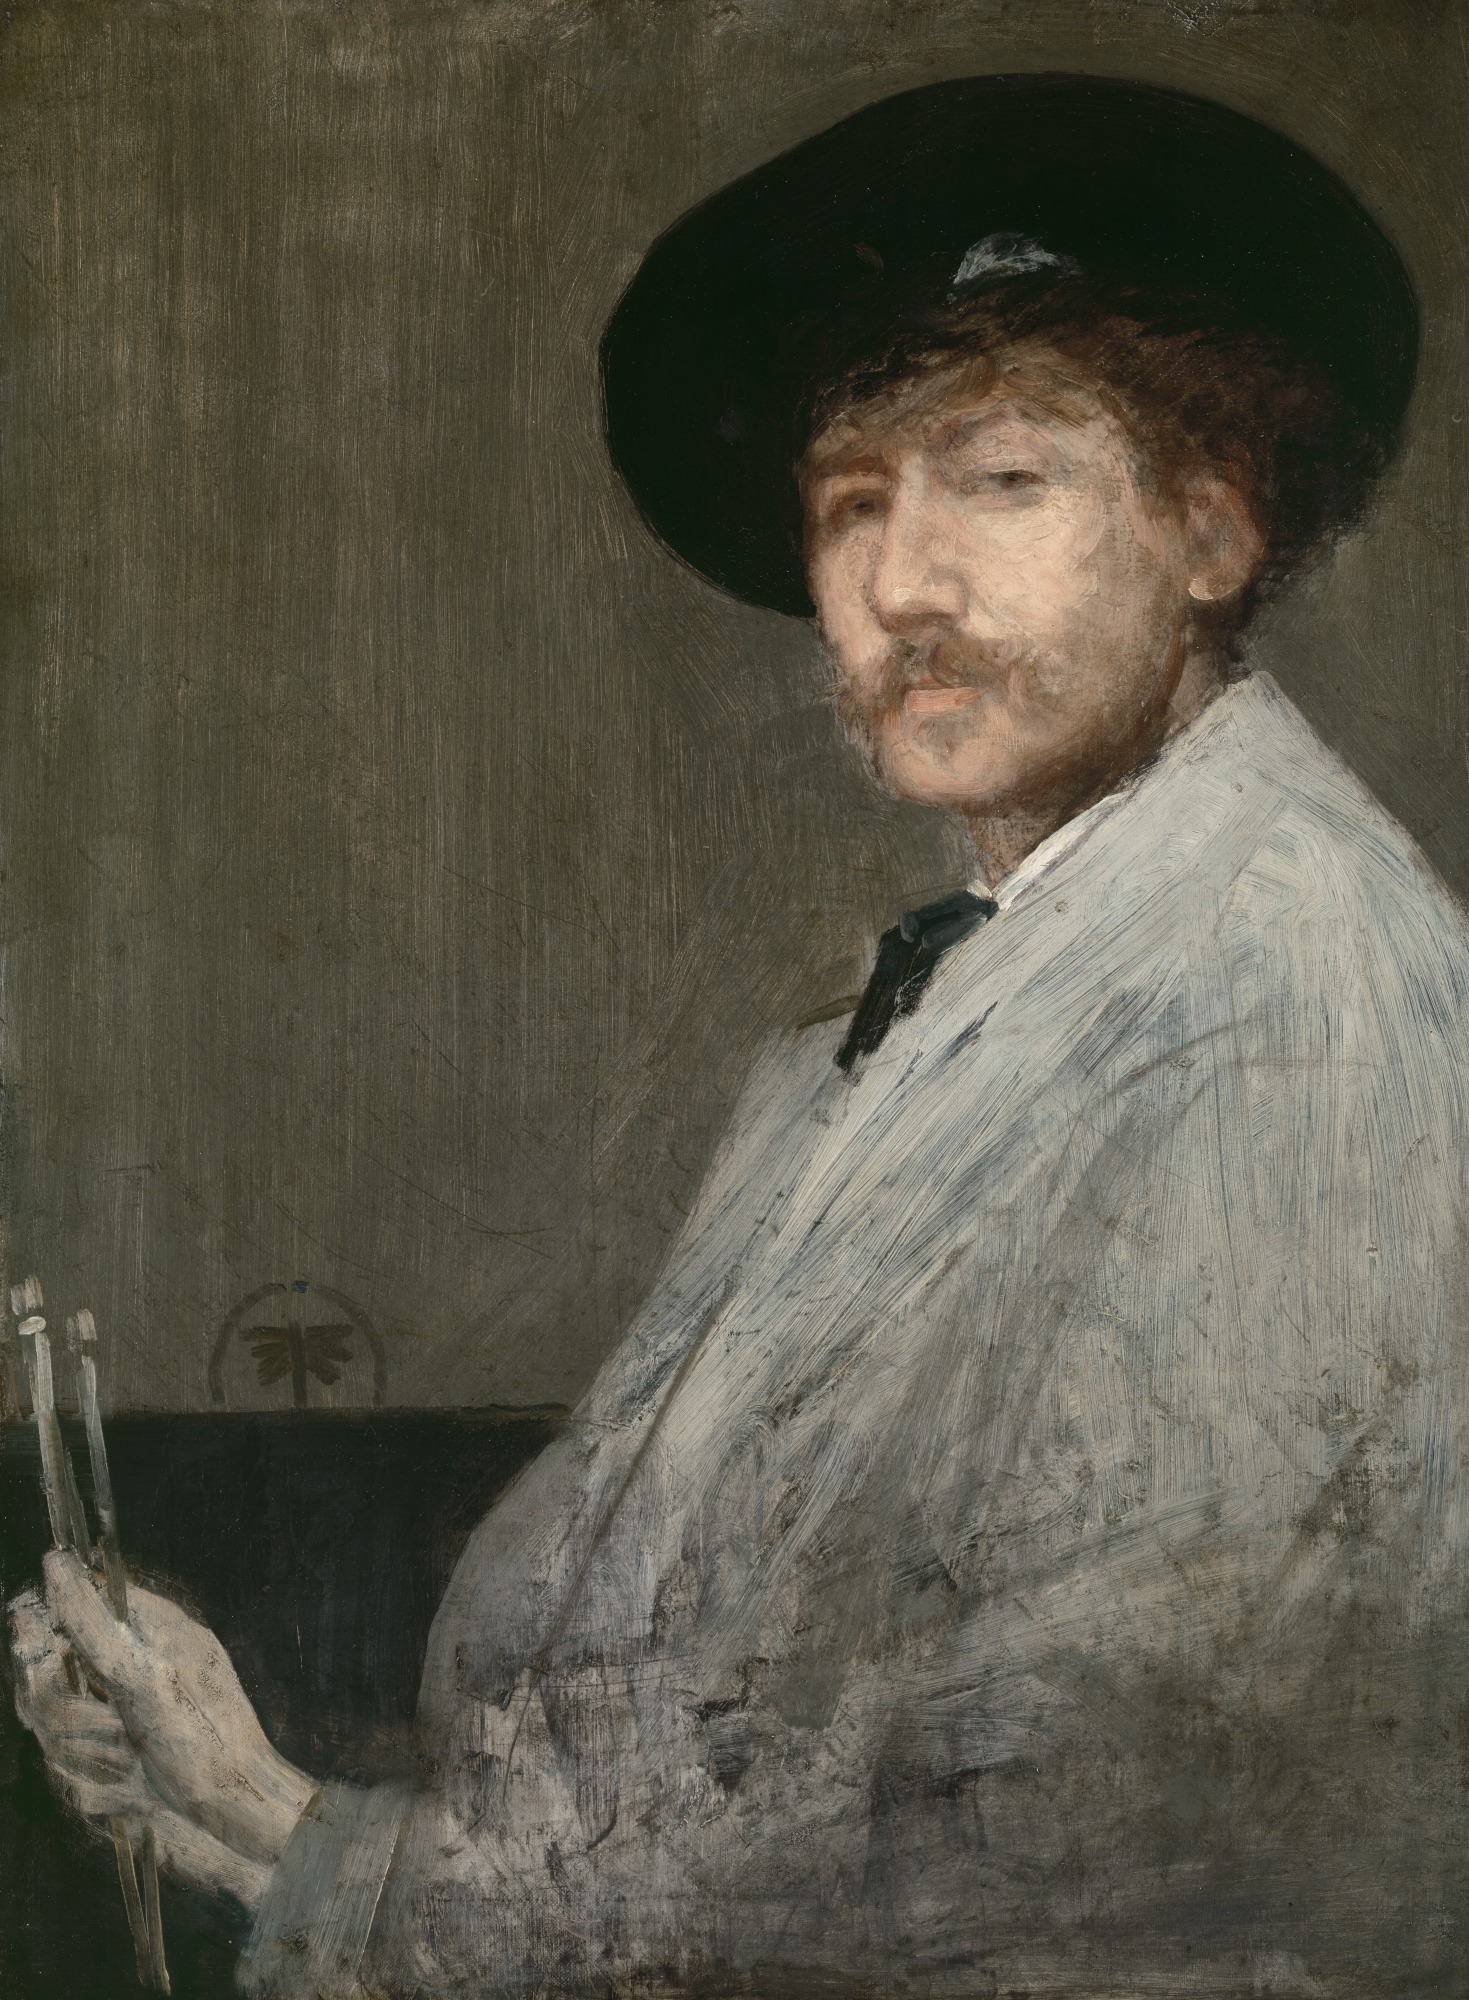 James Abbott McNeill Whistler - July 10, 1834 - July 17, 1903